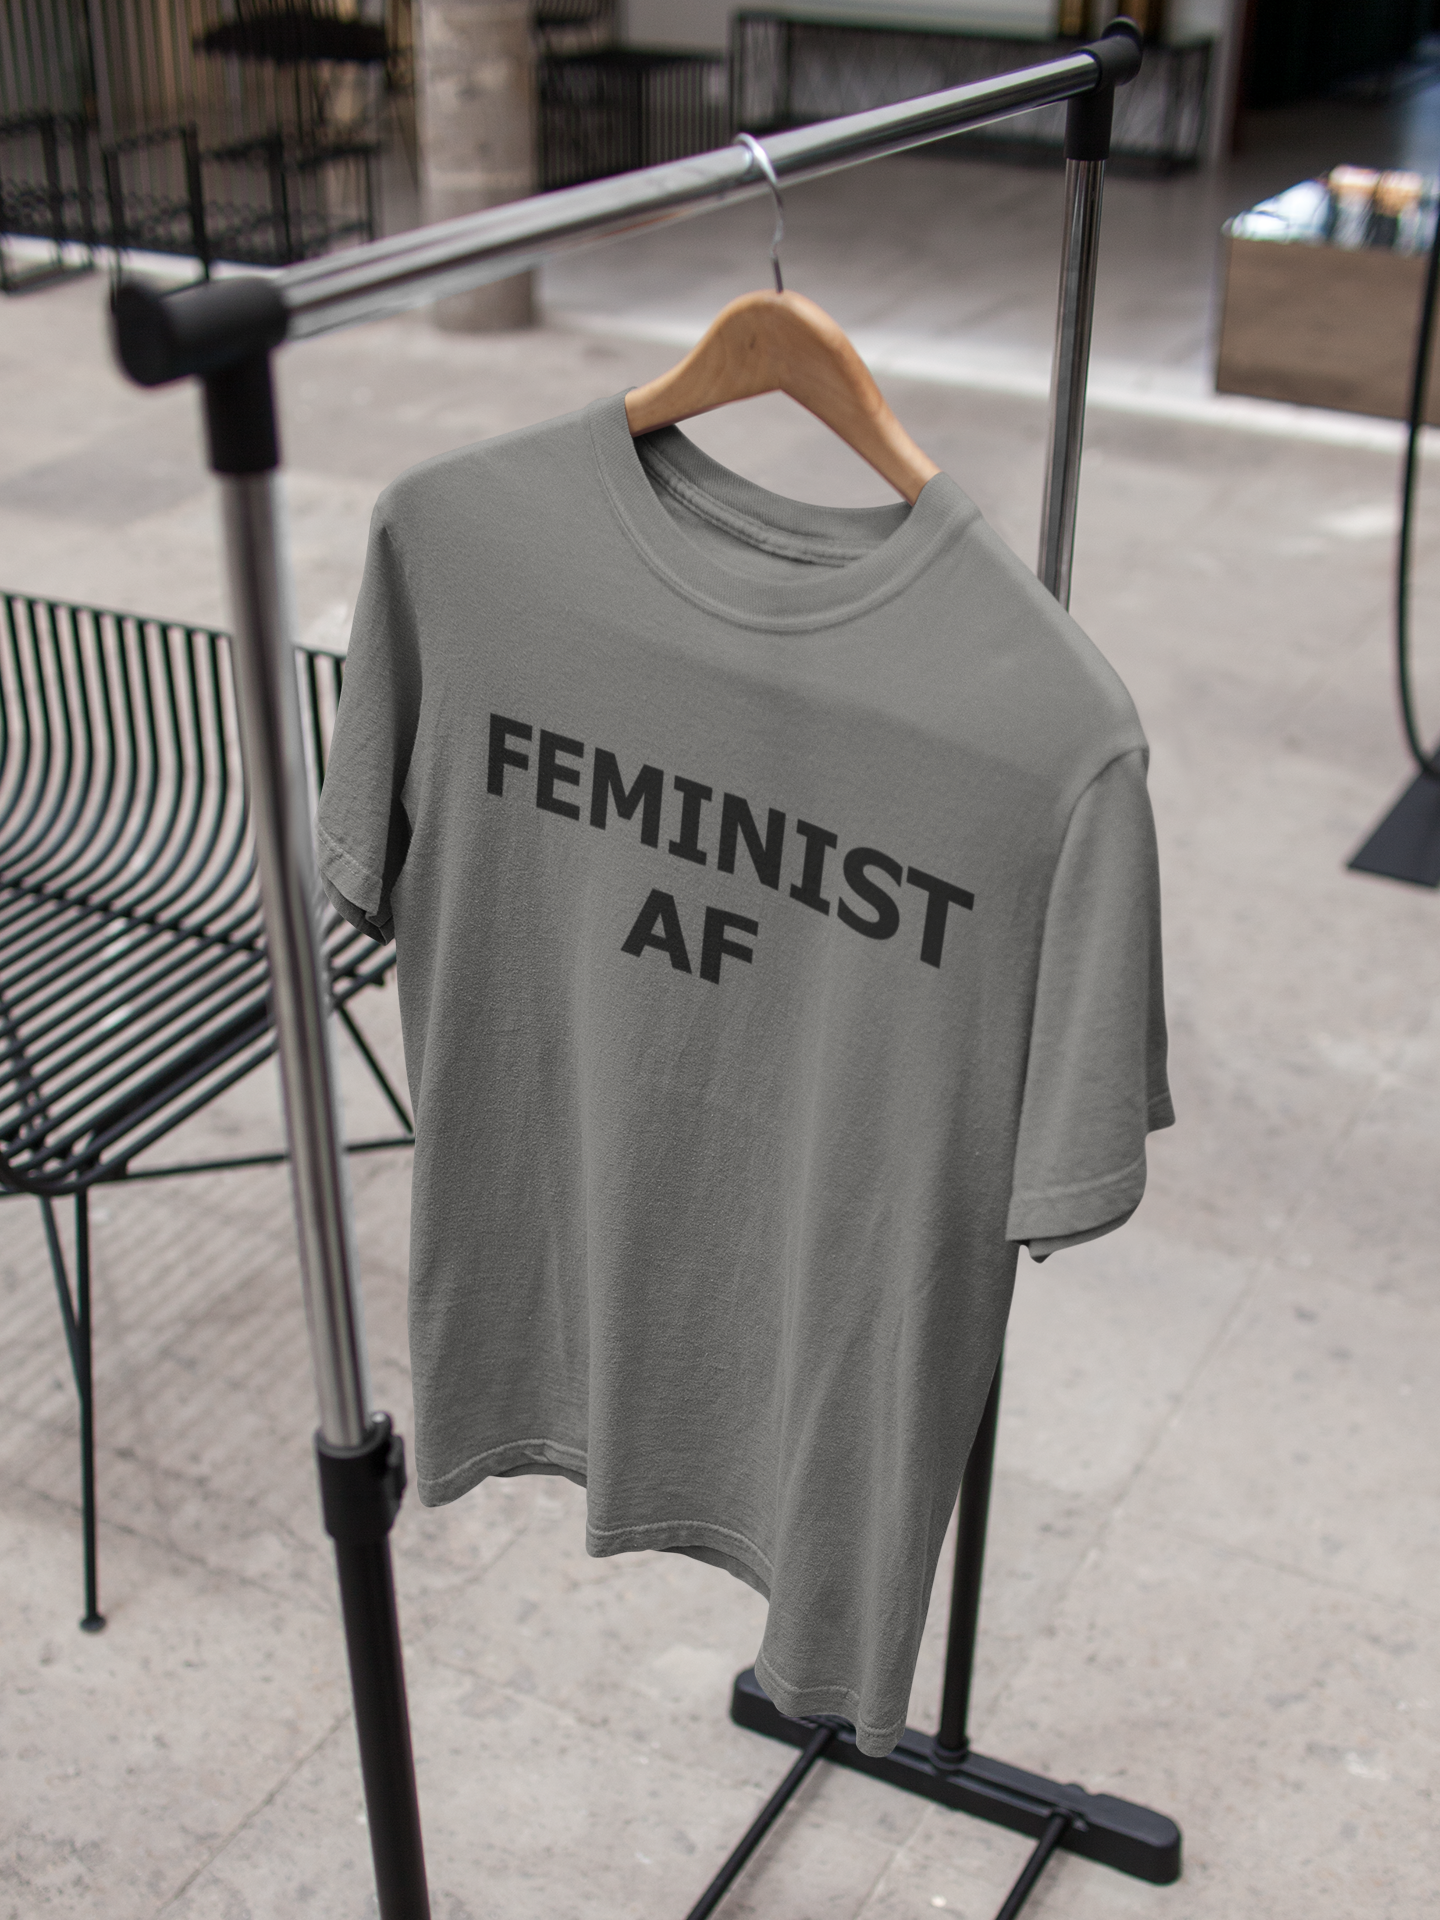 Feminist Af Olivia Wilde Celebrity T-shirt- FunkyTeesClub